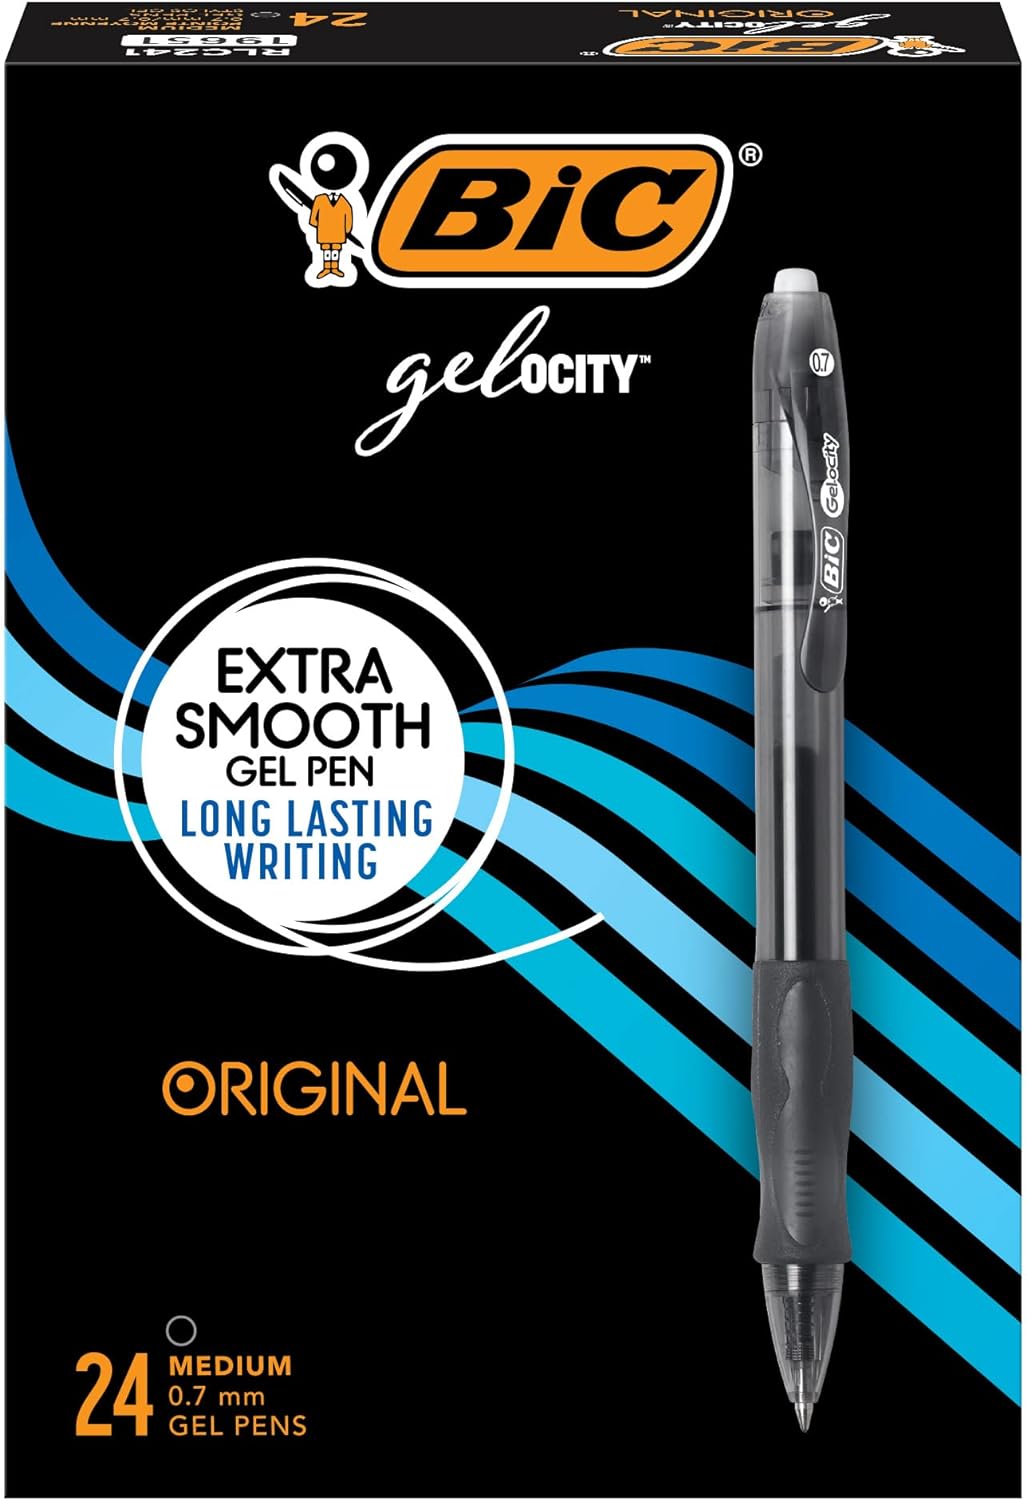 BIC Gel-ocity Original Black Gel Pens, Medium Point (0.7mm), 24-Count Pack, Retractable Gel Pens With Comfortable Grip